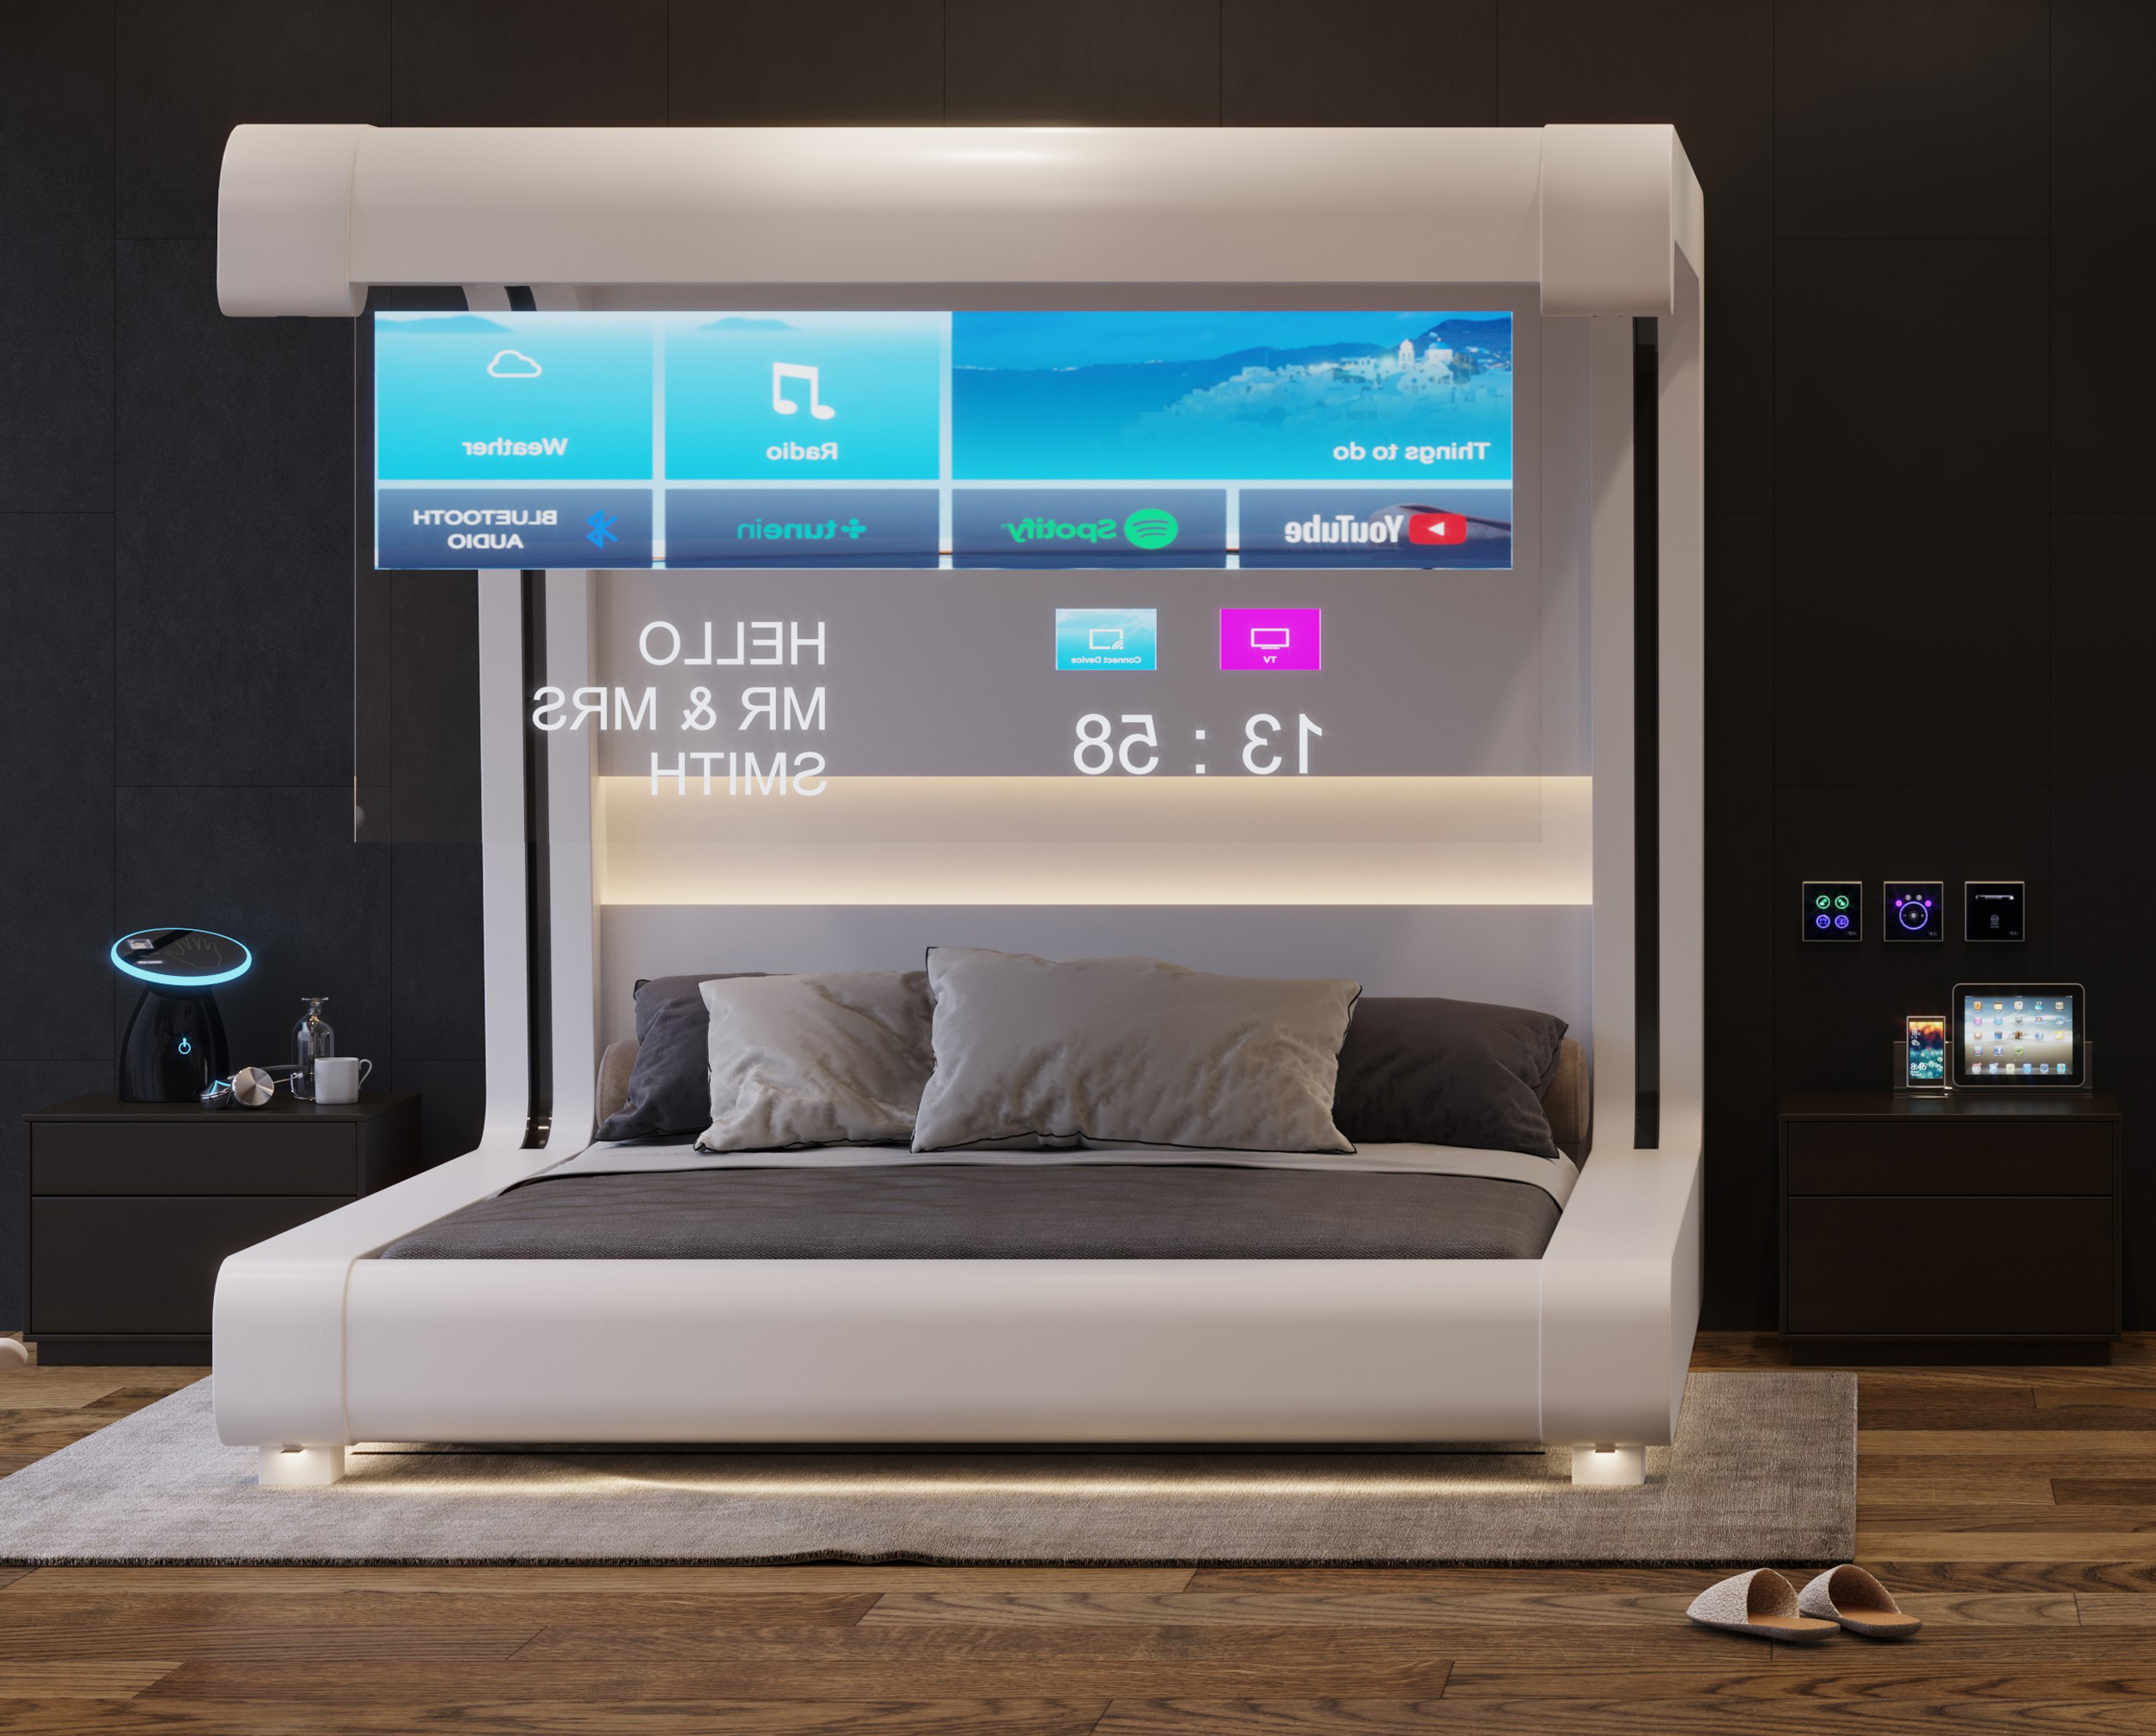 Glass TVs in future hotels